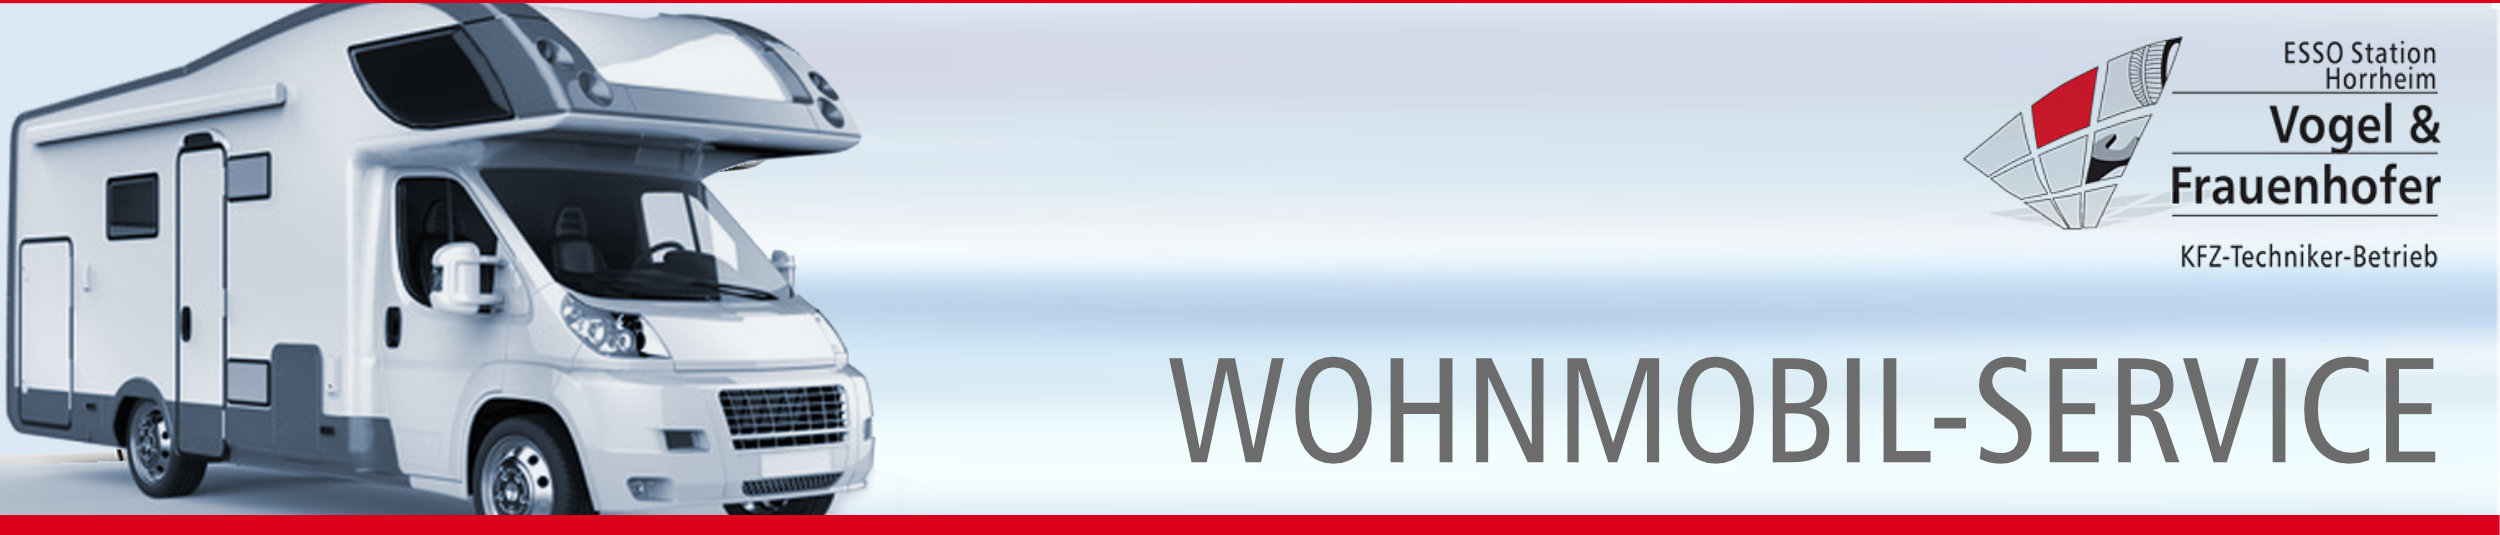 Wohnmobil_Service